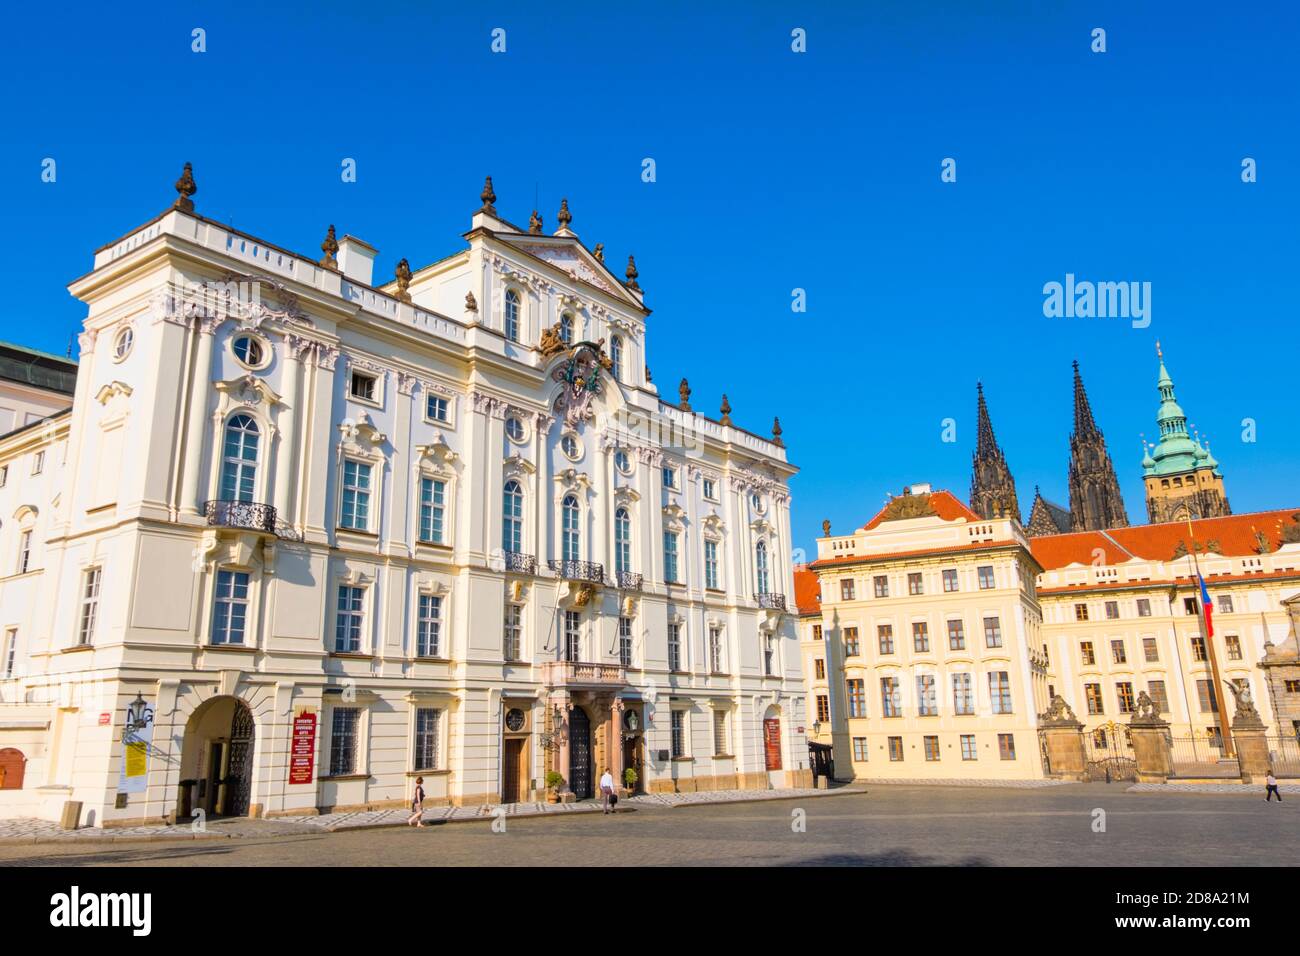 Arcibiskupský palác, Palazzo dell'Arcivescovo, Hradčanské náměstí, Hradcany, Praga, Repubblica Ceca Foto Stock